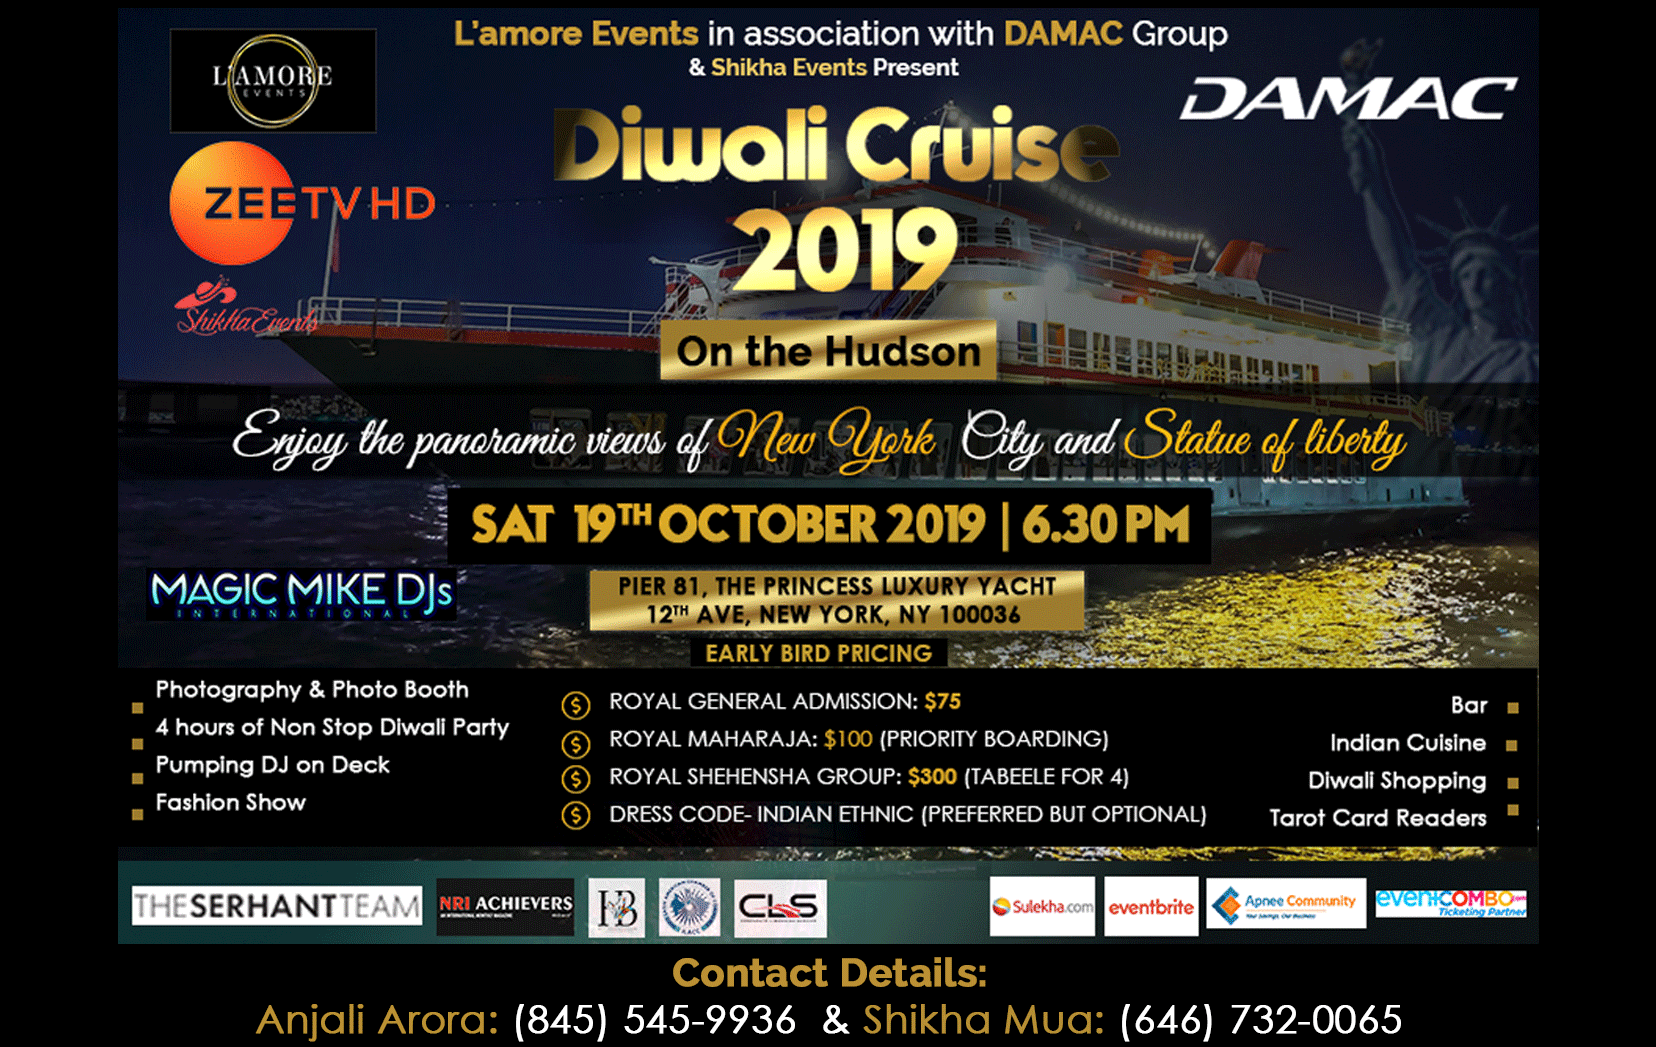 Diwali Cruise 2019 on the Hudson